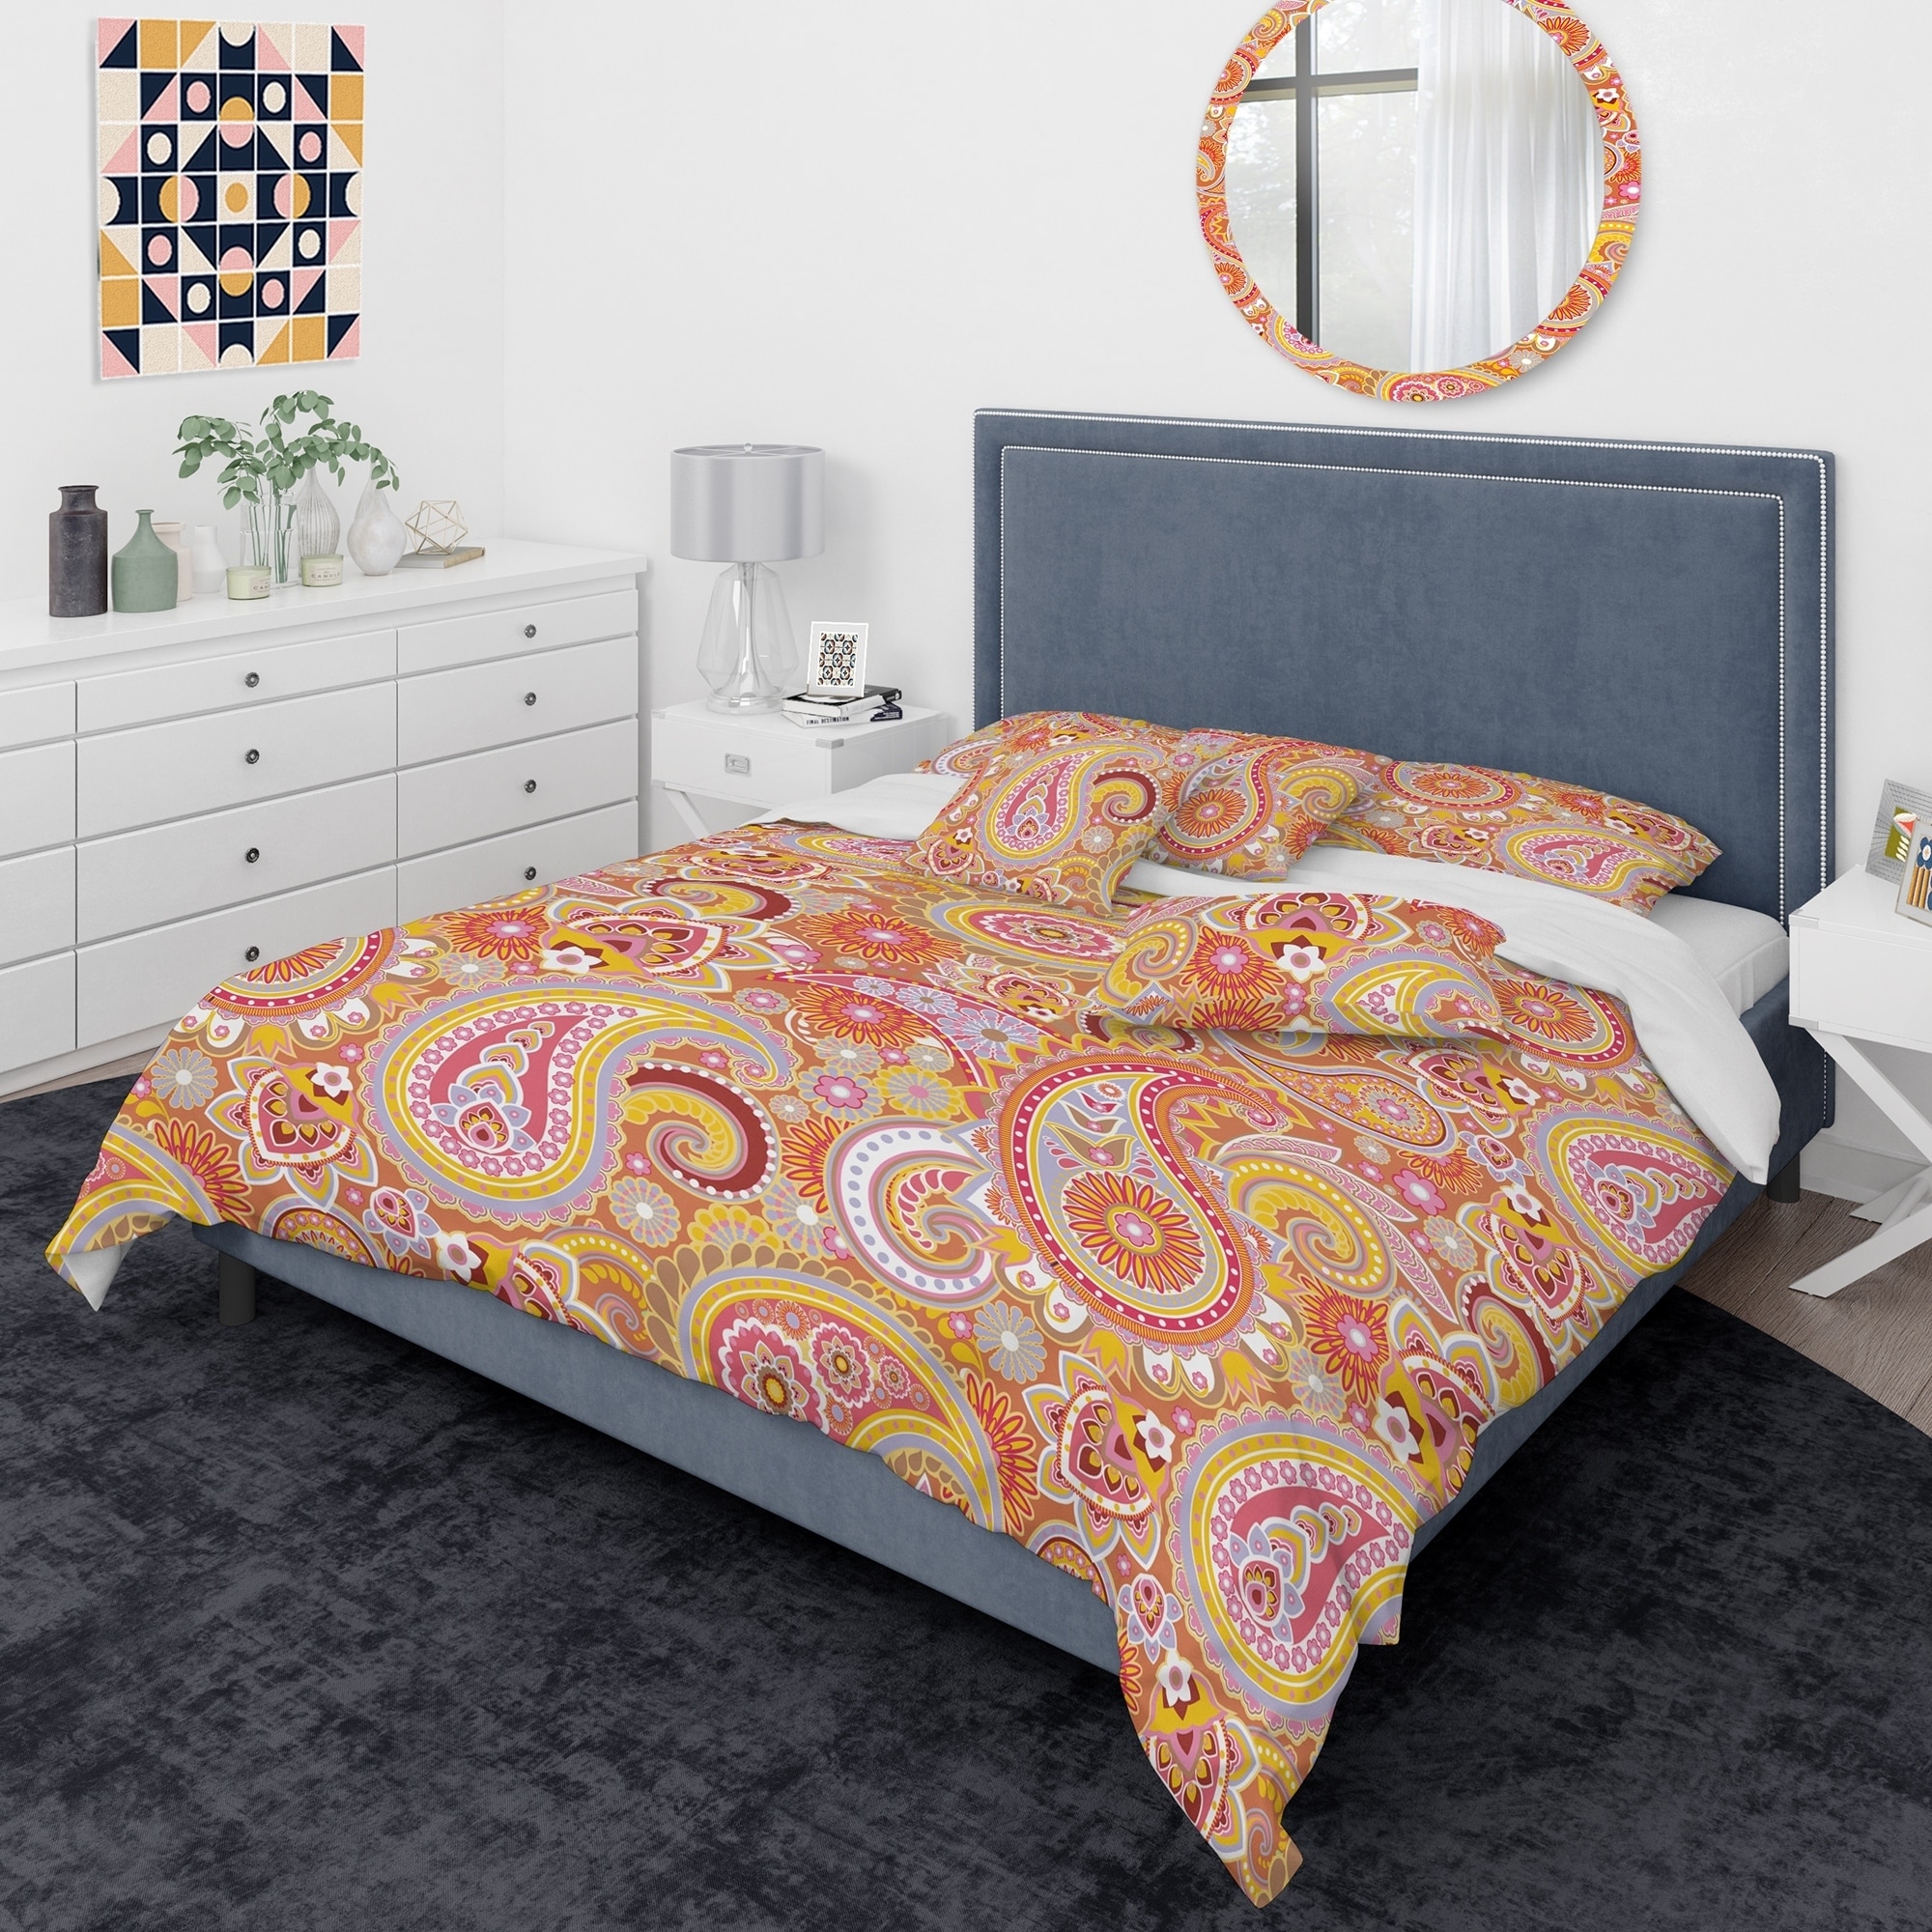 Designart Pattern Based On Traditional Asian Elements Mid Century Modern Duvet Cover Comforter Set Overstock 29257772